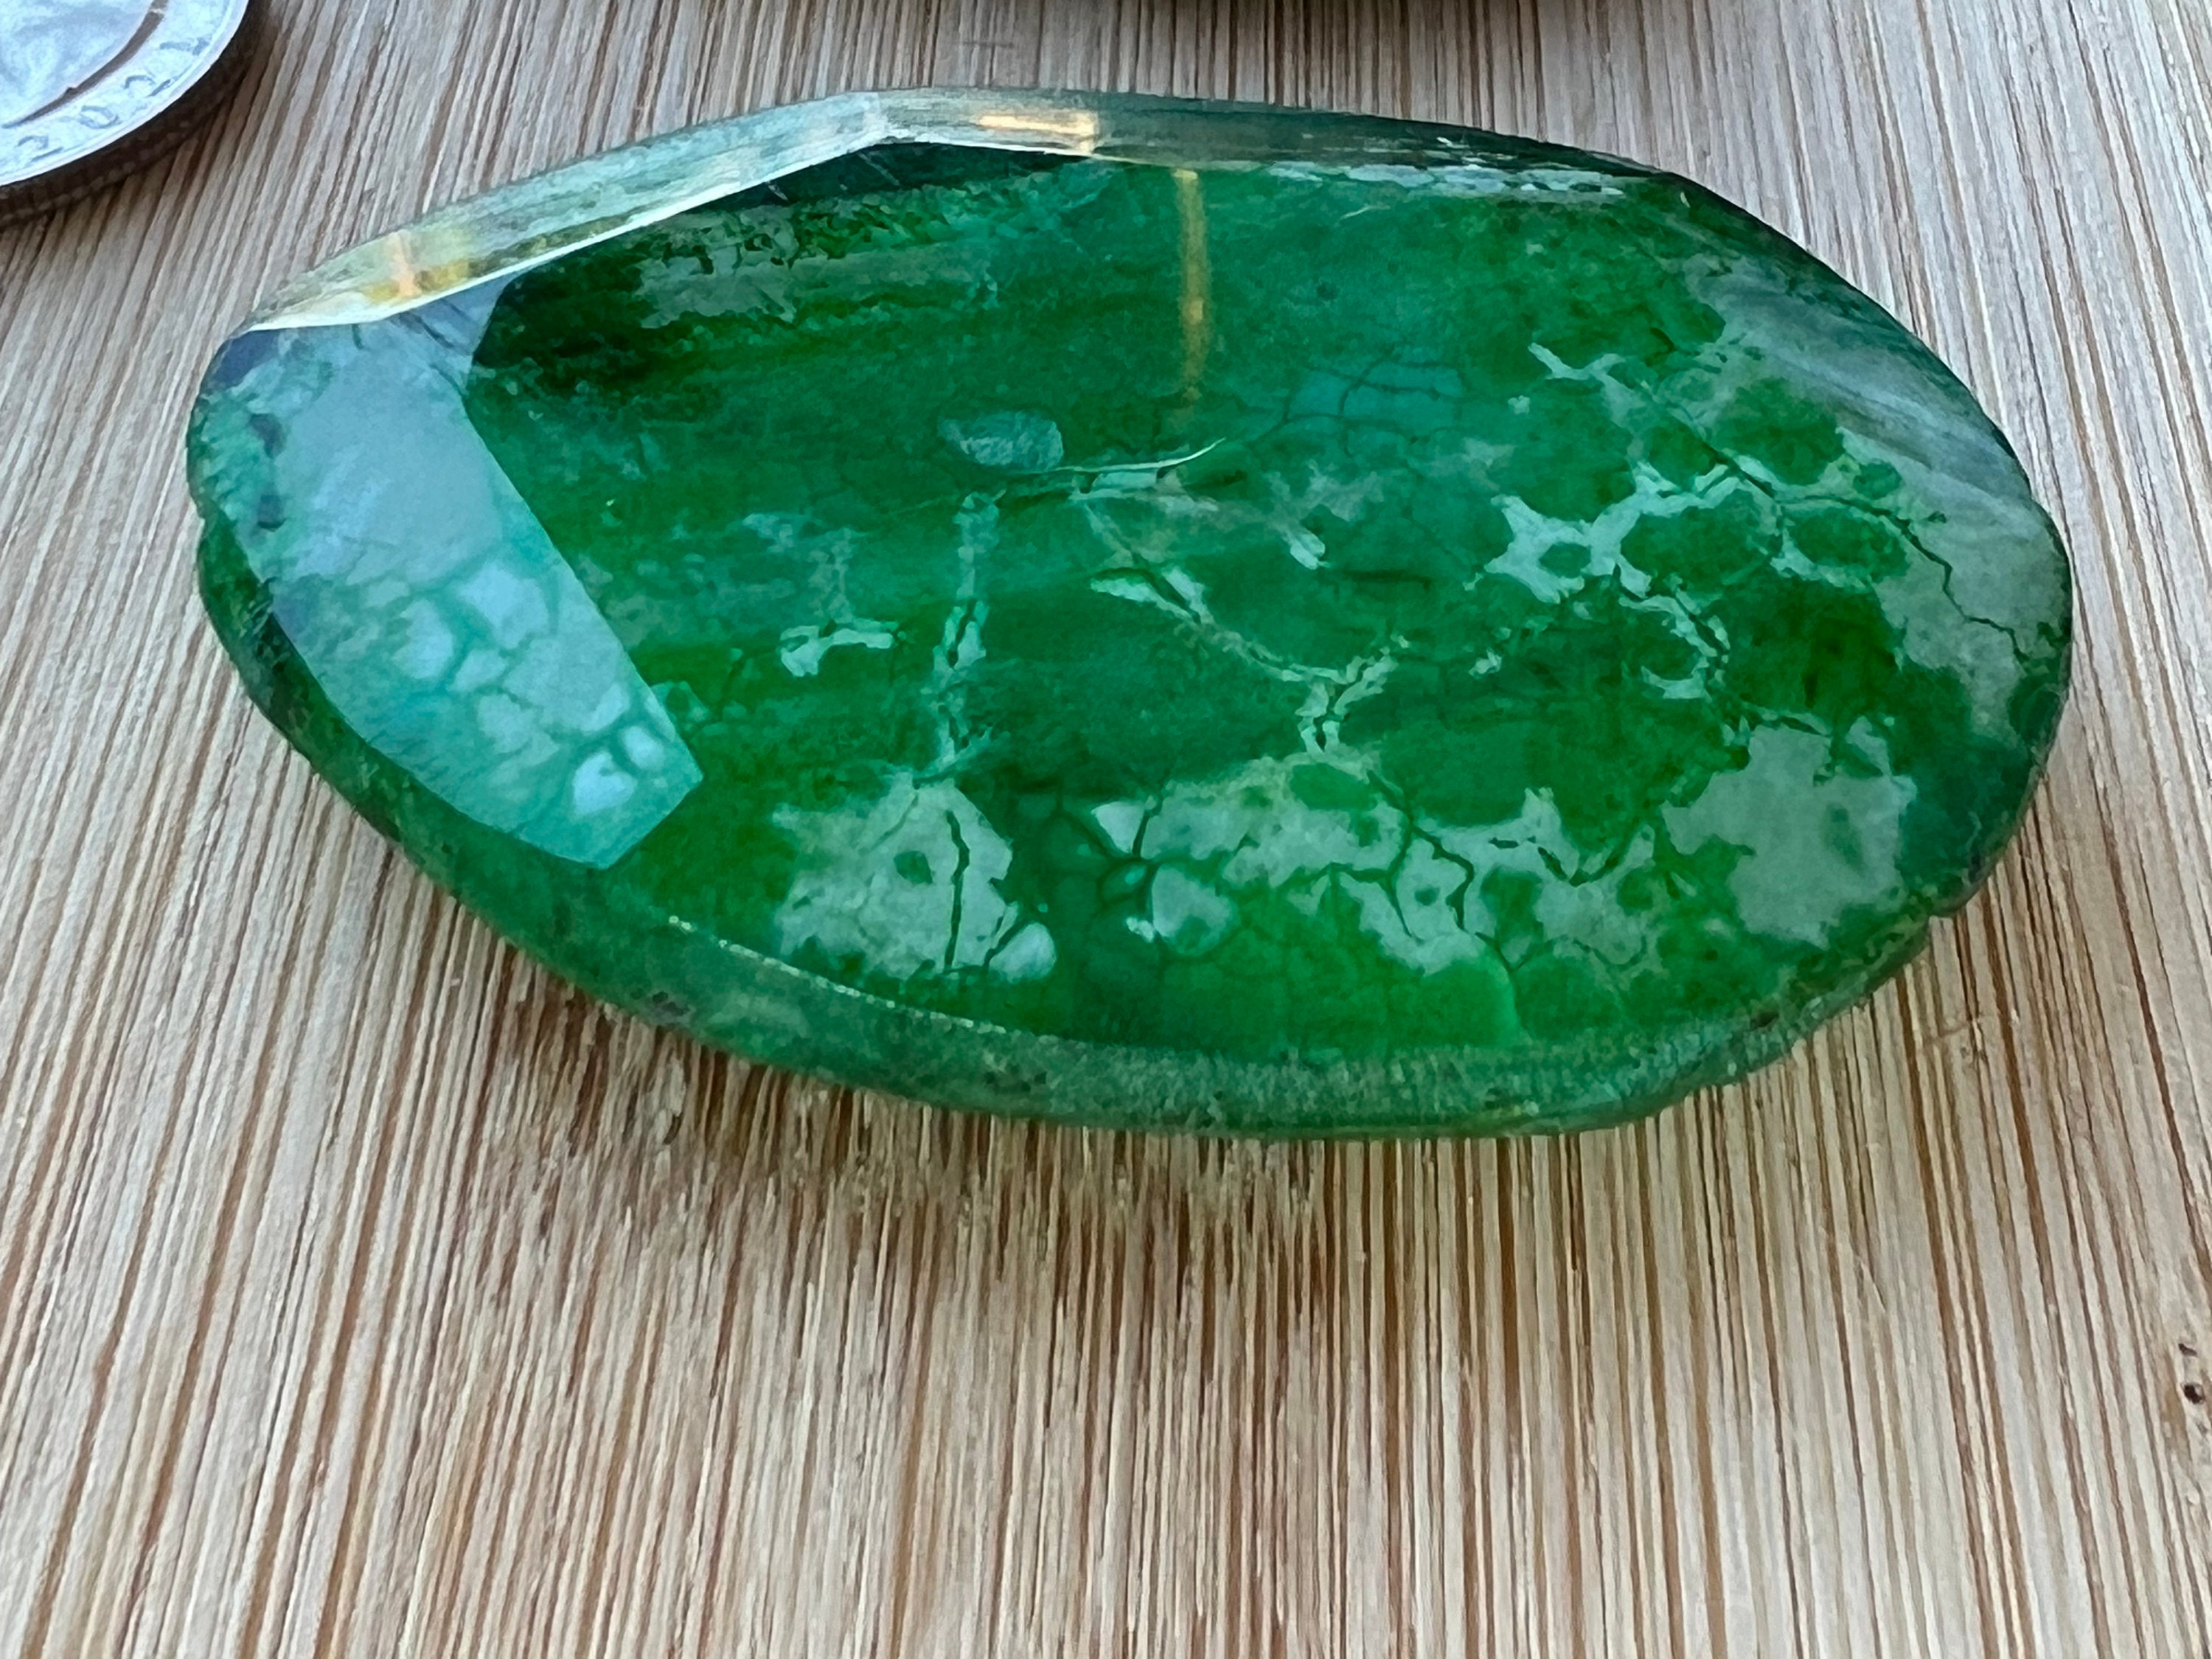 Octagon Acrylic Gems Flat Back 25x18mm 15 Pcs Green Emerald H106